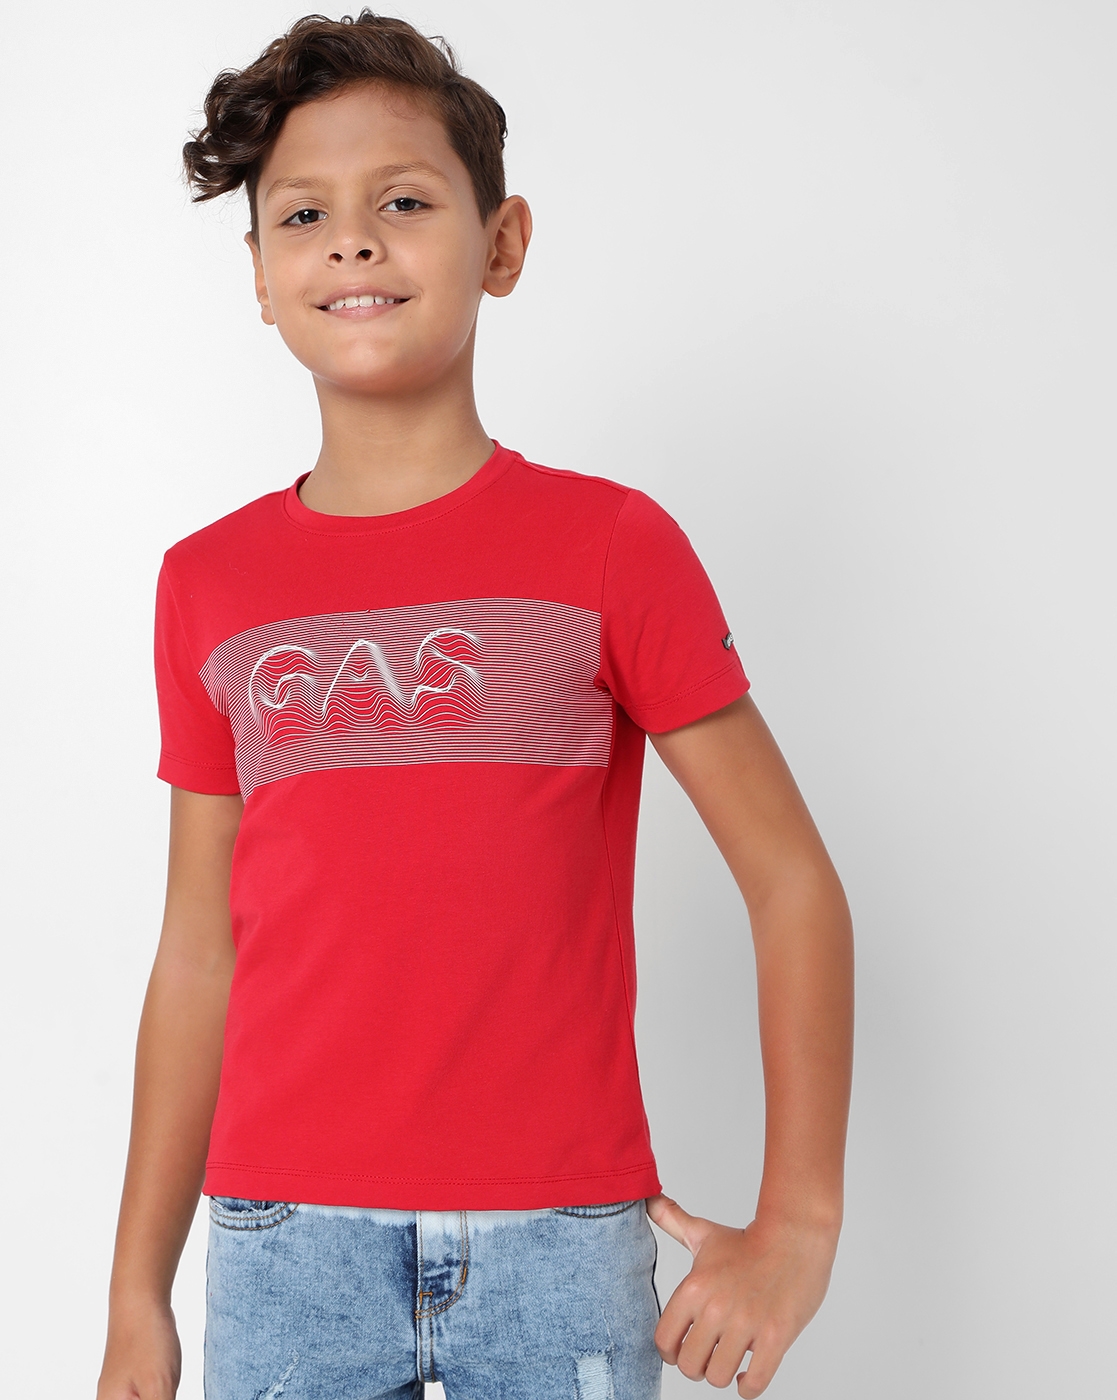 Boys Scuba Jr Illusion IN T-Shirts